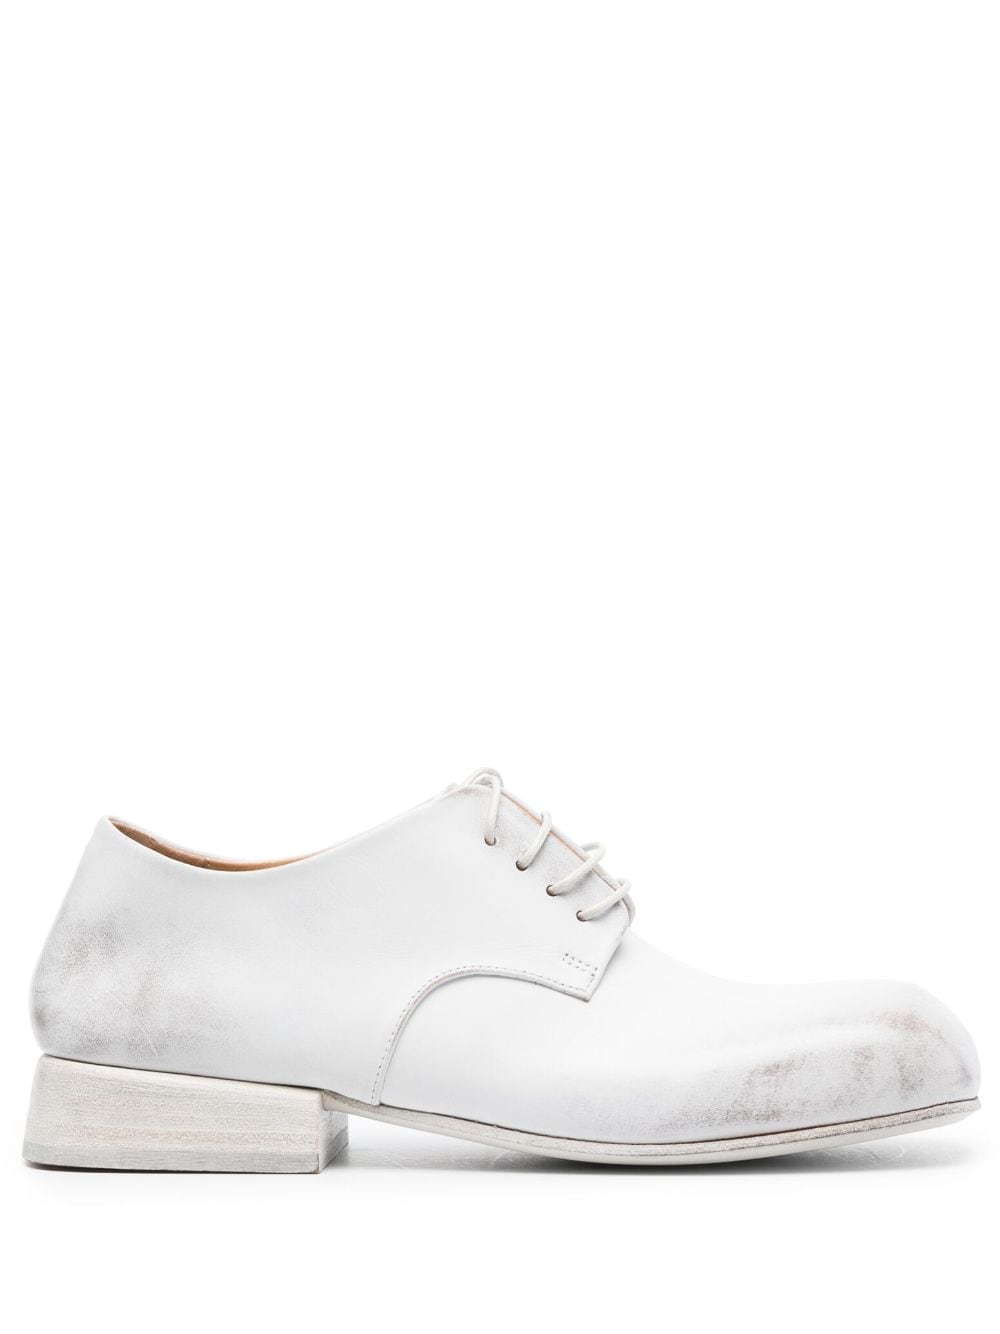 Marsèll Tellina leather lace-up shoes - White von Marsèll